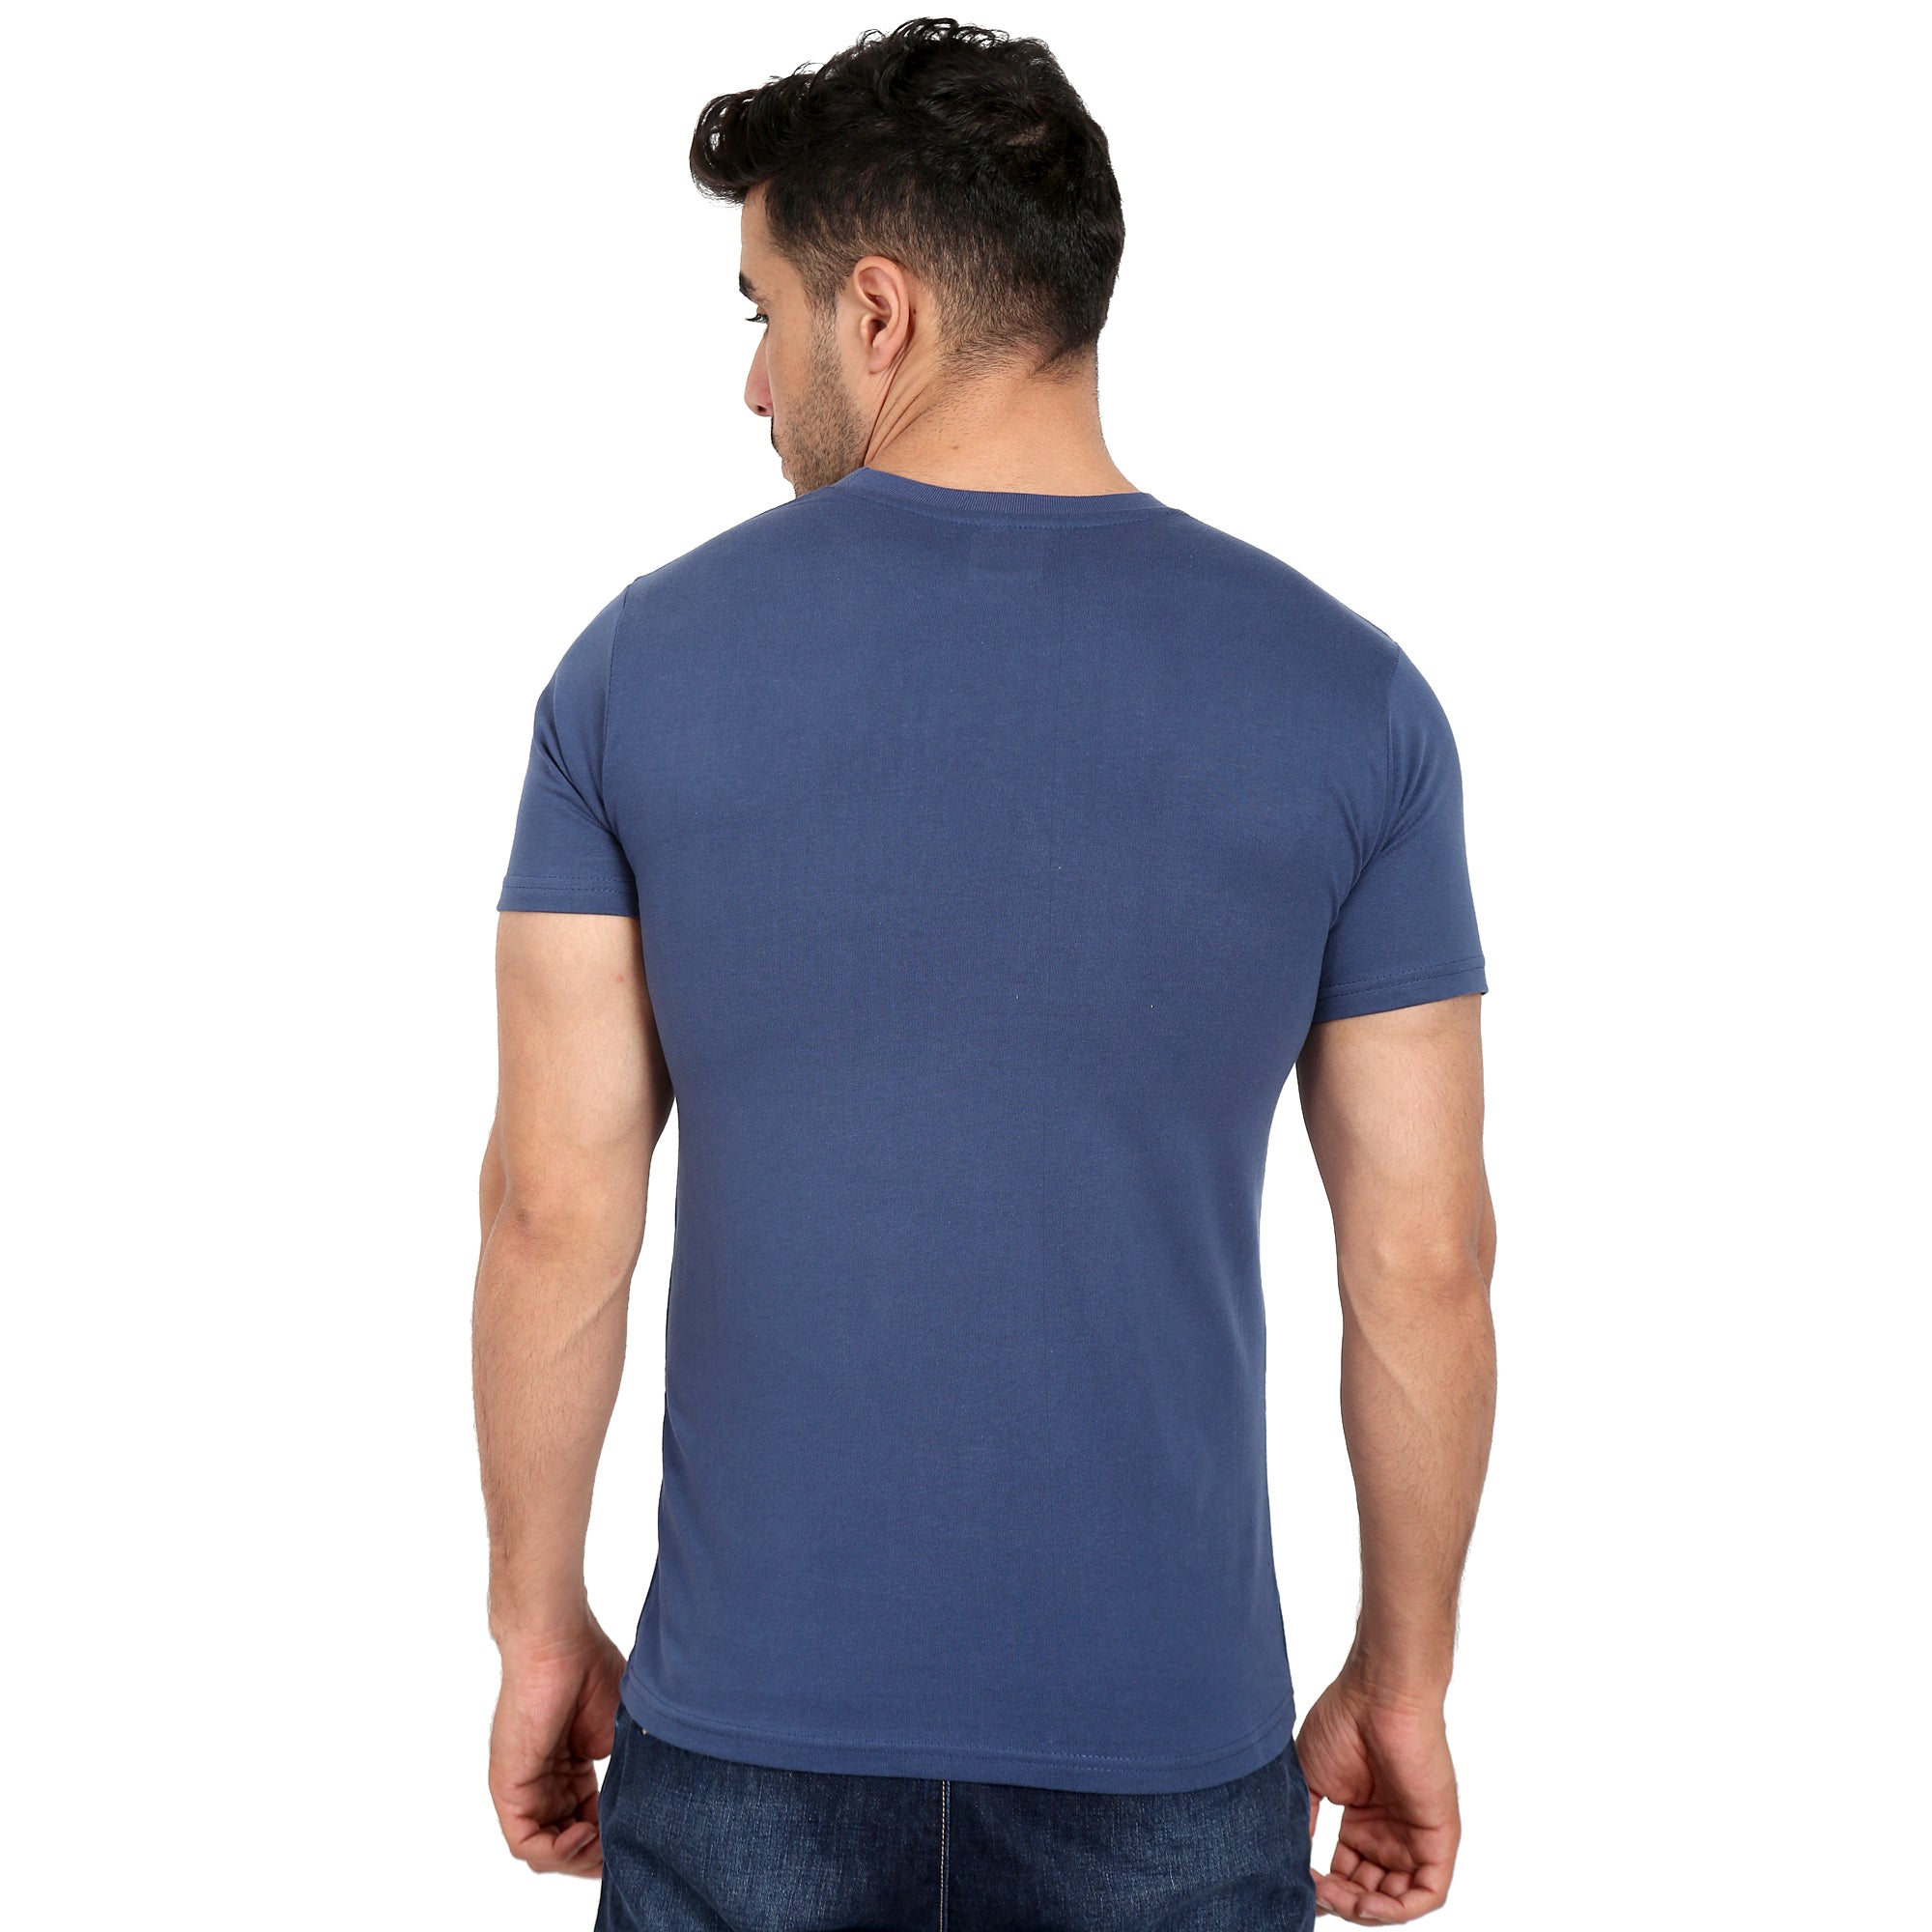 Combo Offer - Men Crew Neck Cotton T-Shirts - Half Sleeves - 3 Colors - Black, Blue & Grey